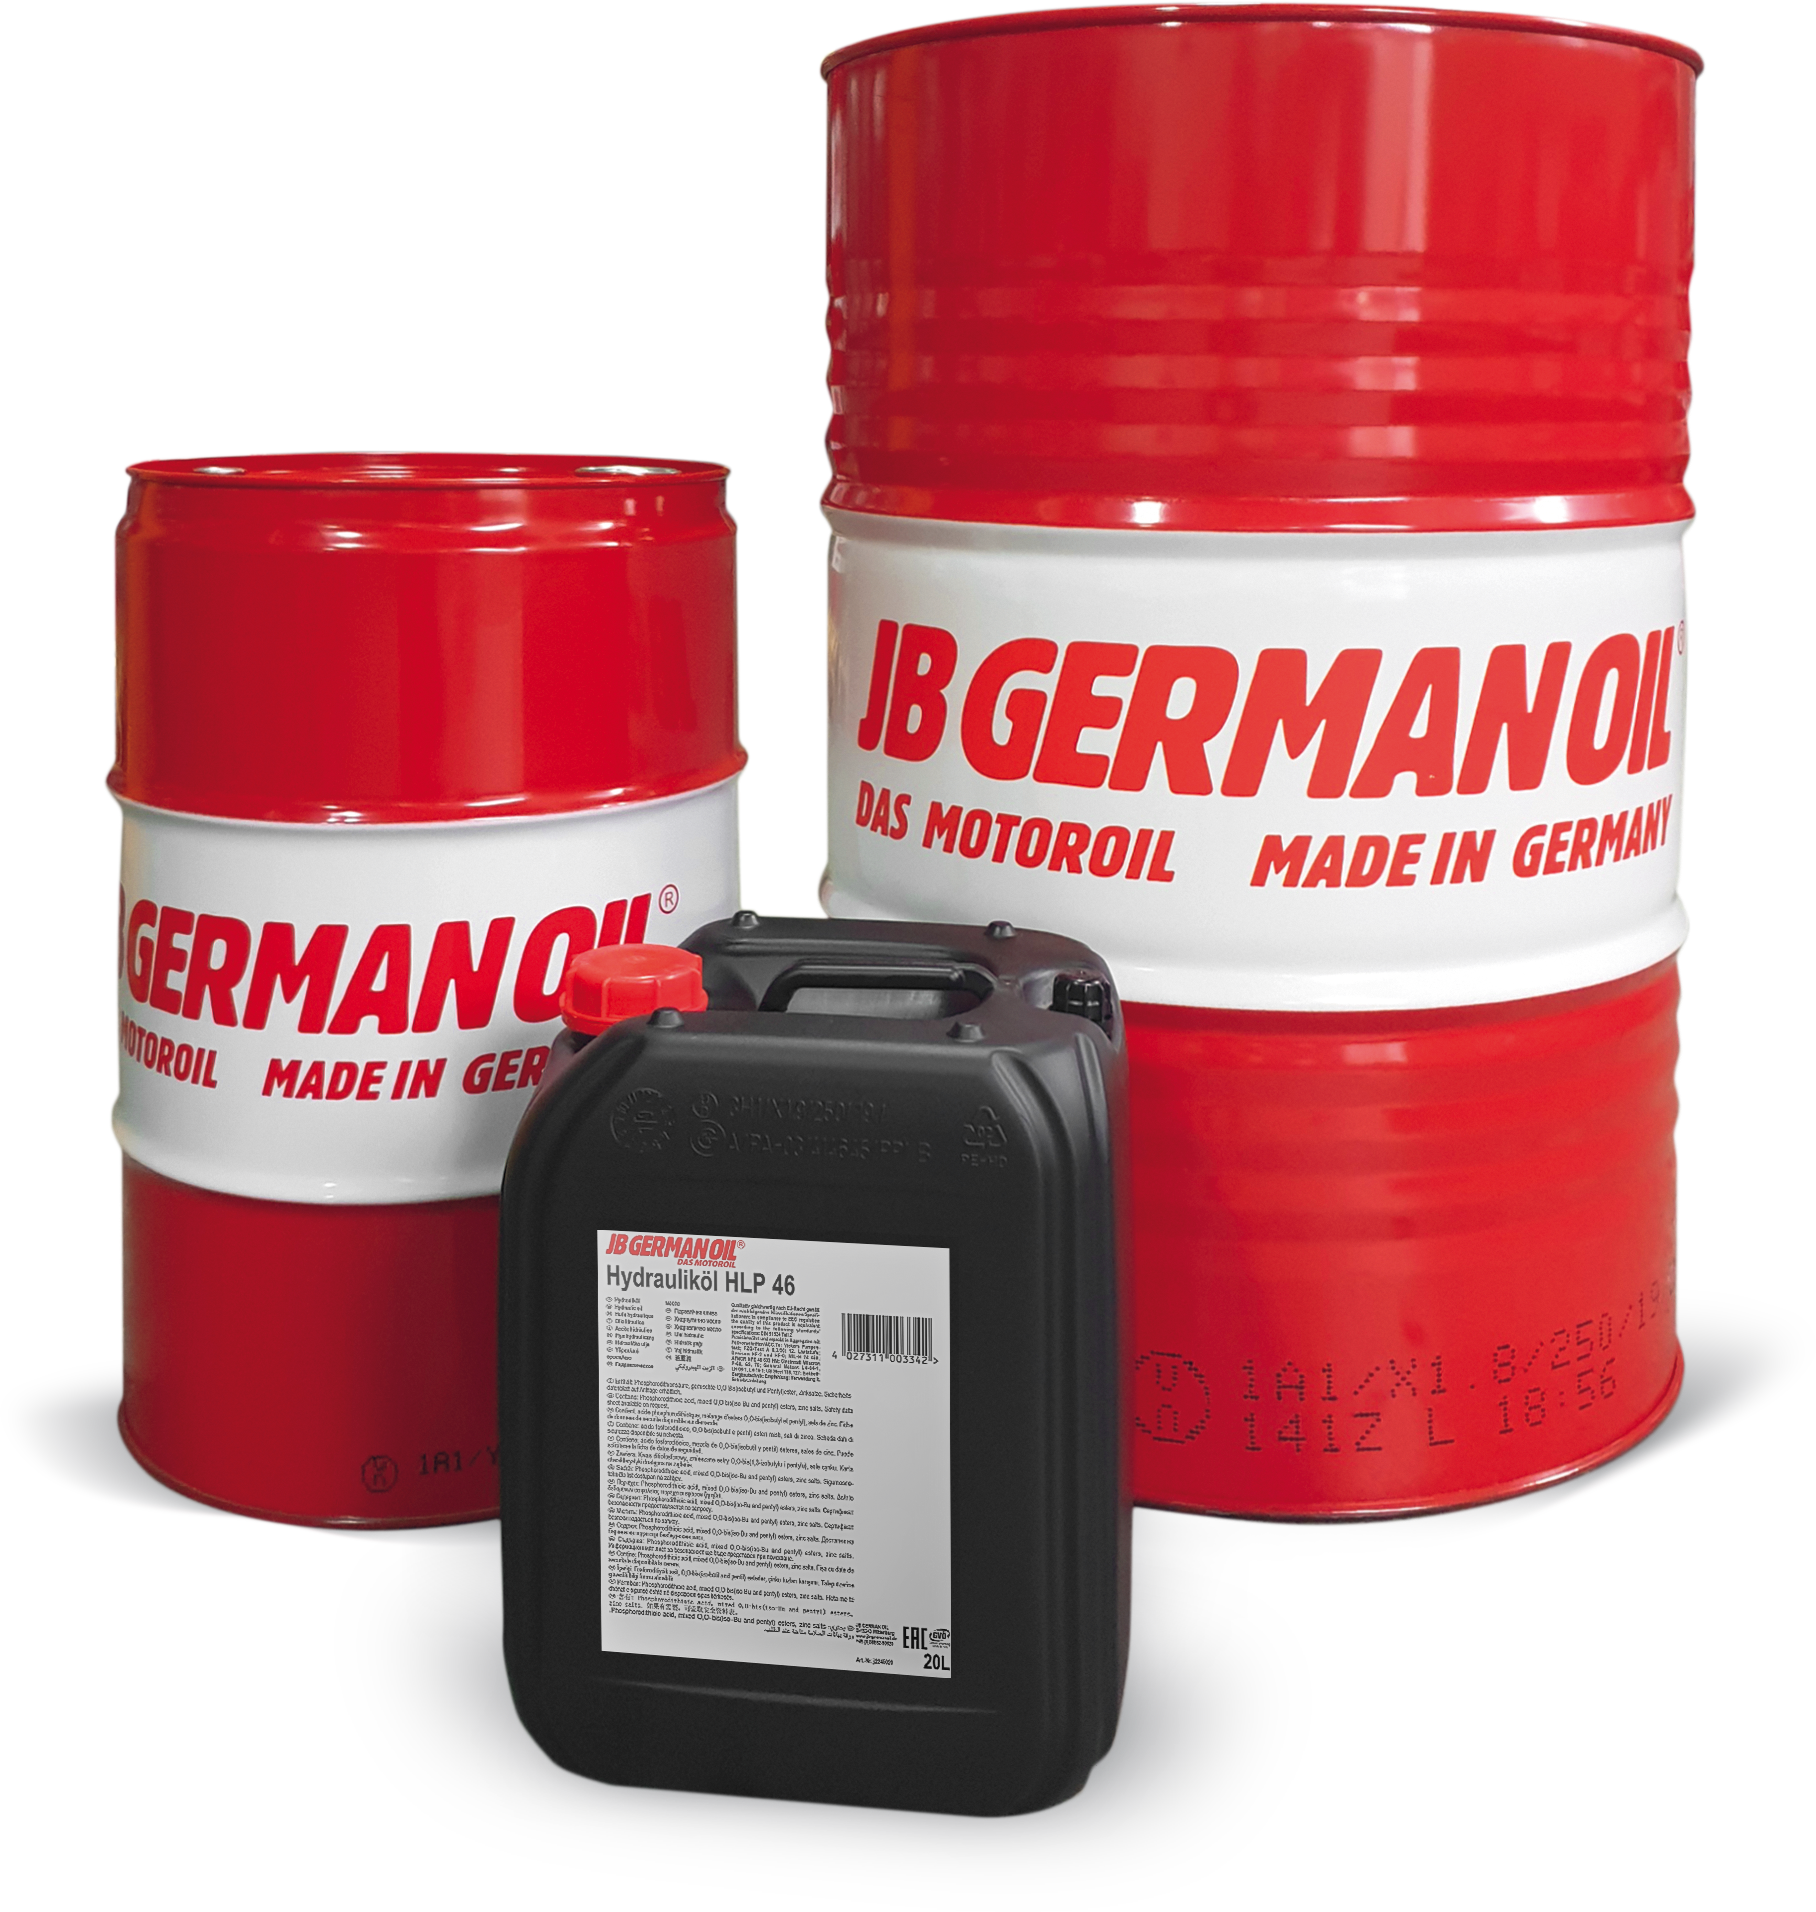 Hydraulic oil HLP 46 – JB GERMANOIL